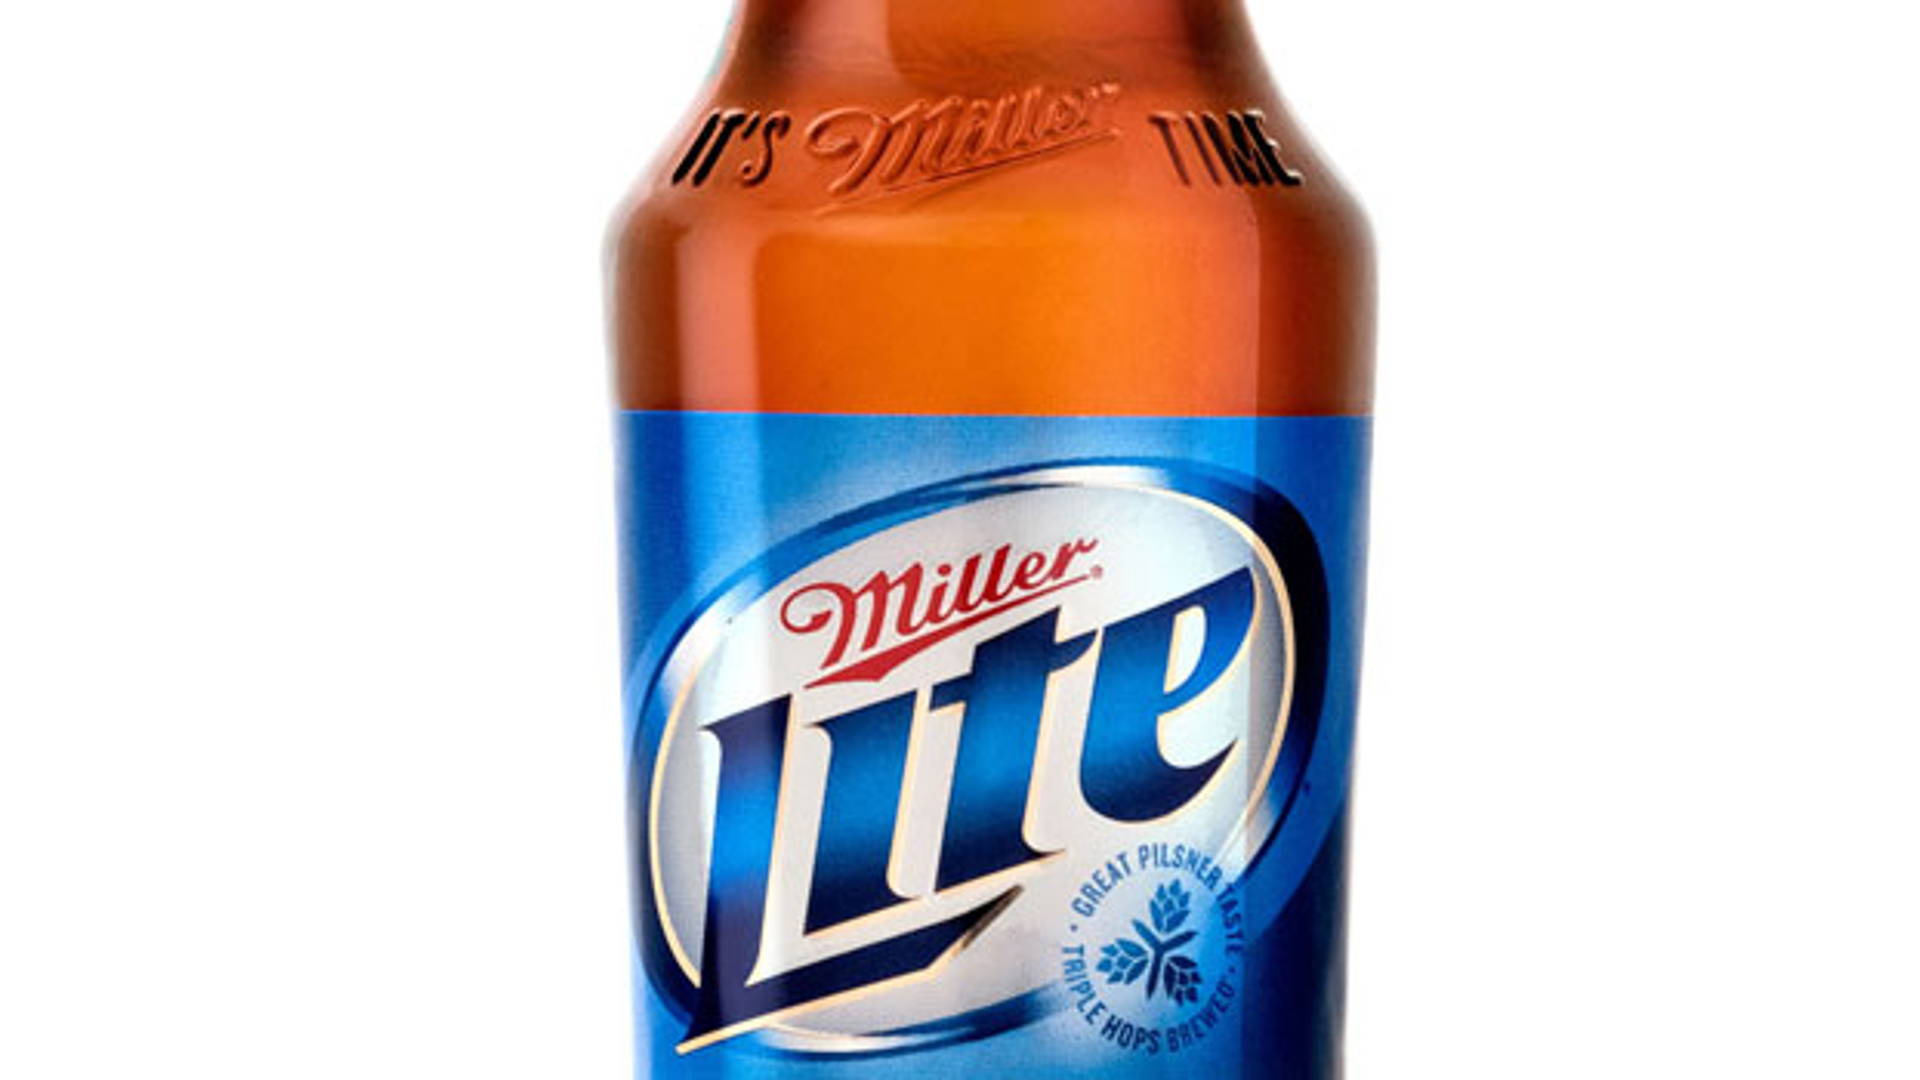 Featured image for New Miller Lite Bottle Design